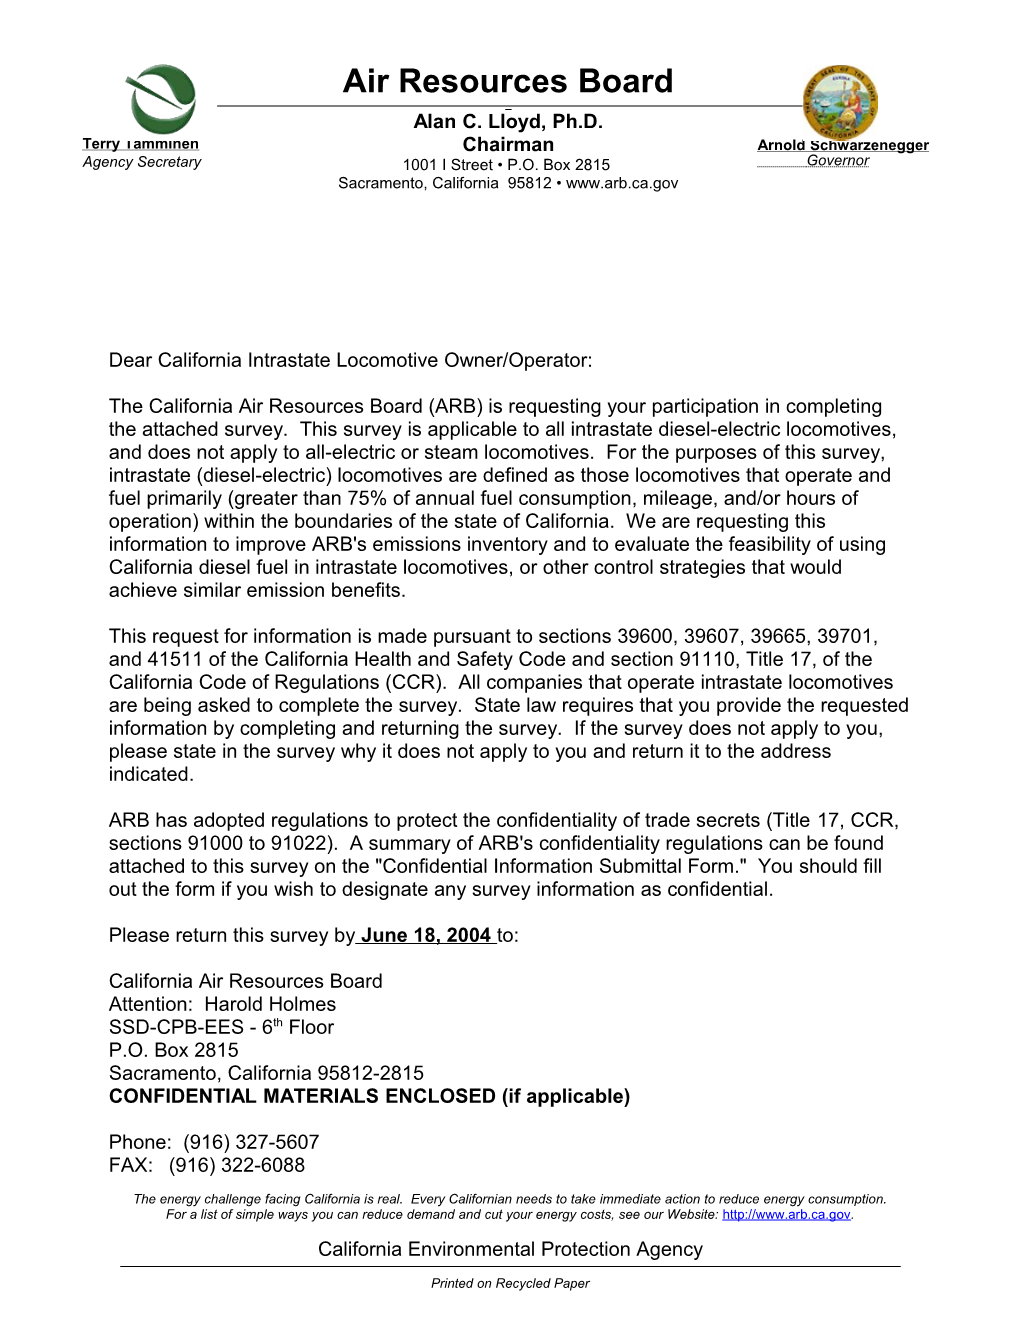 California Environmental Protection Agency s6